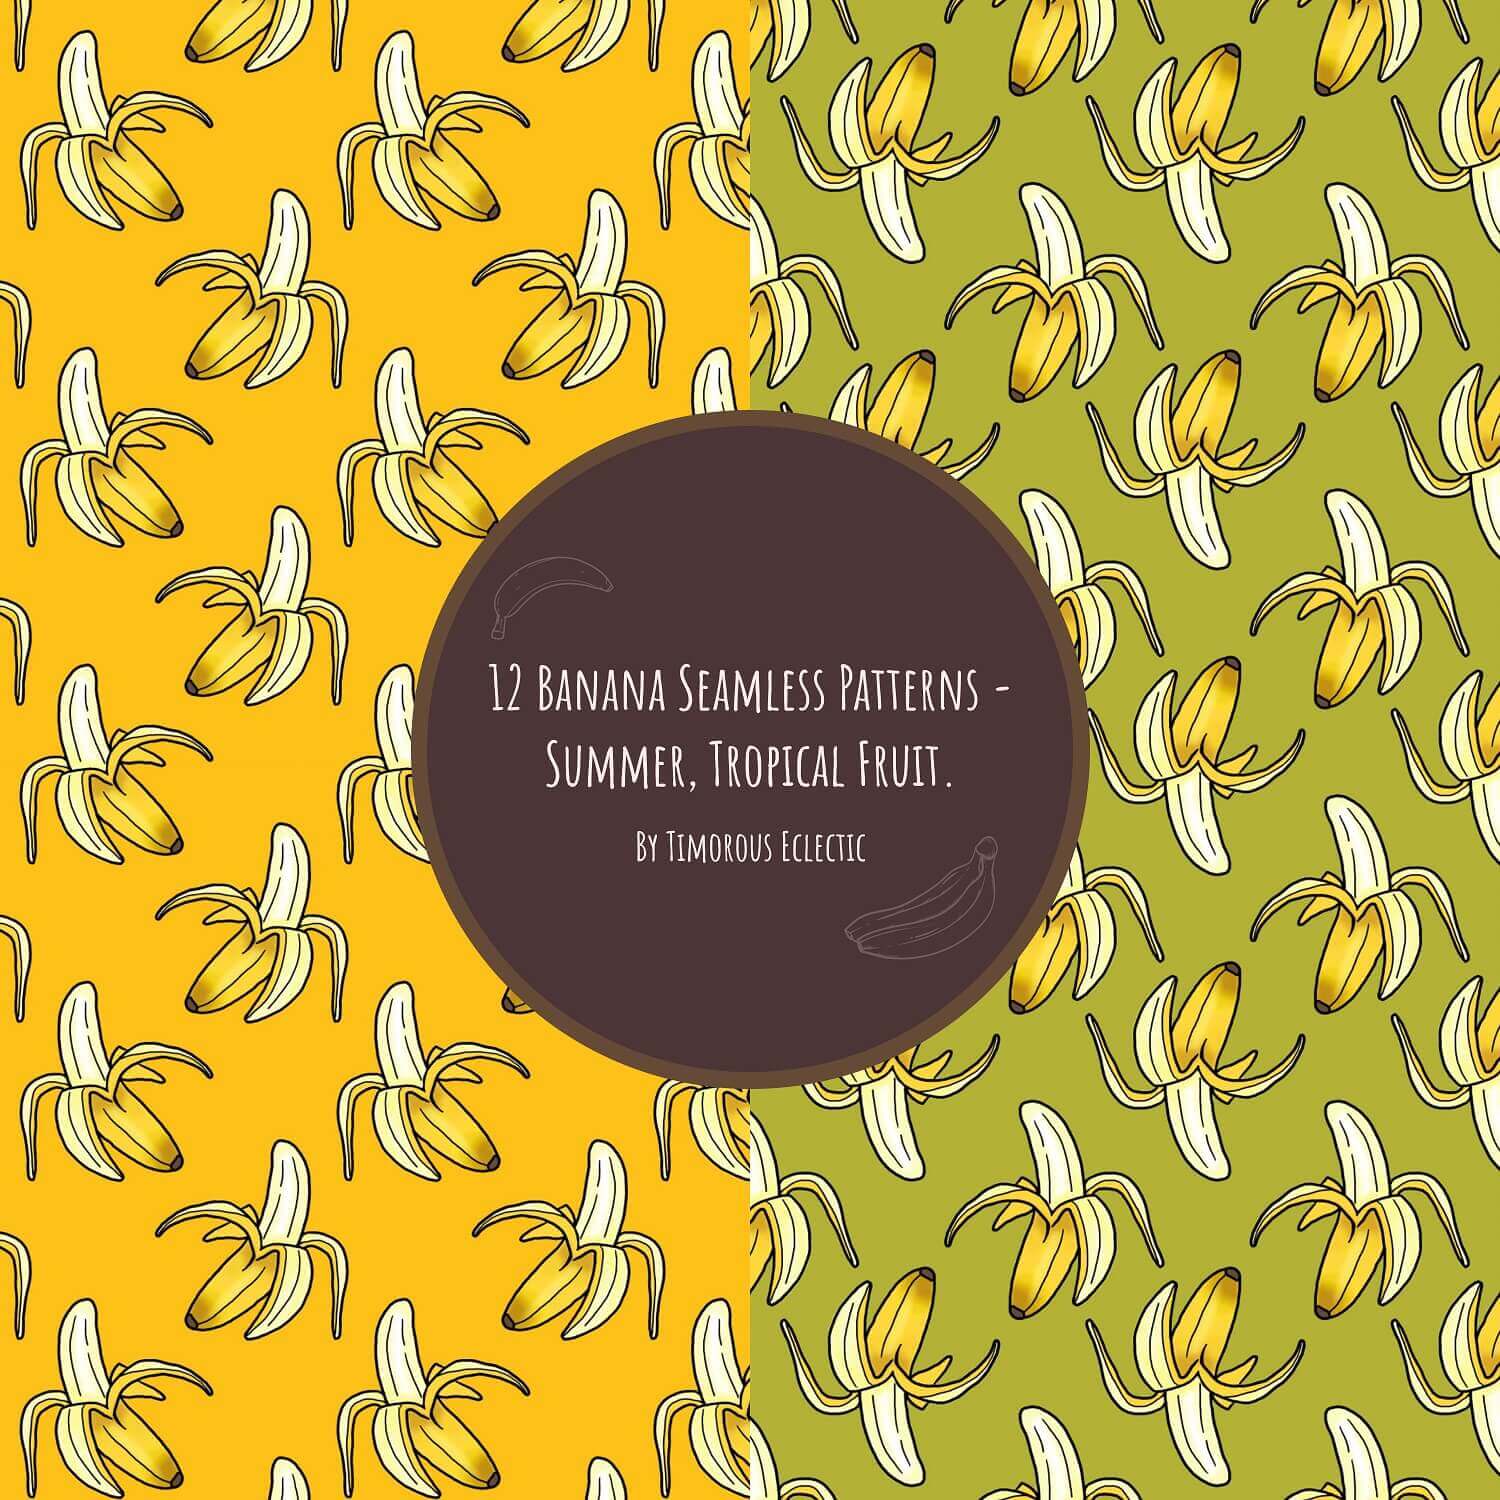 12 Banana seamless patterns.